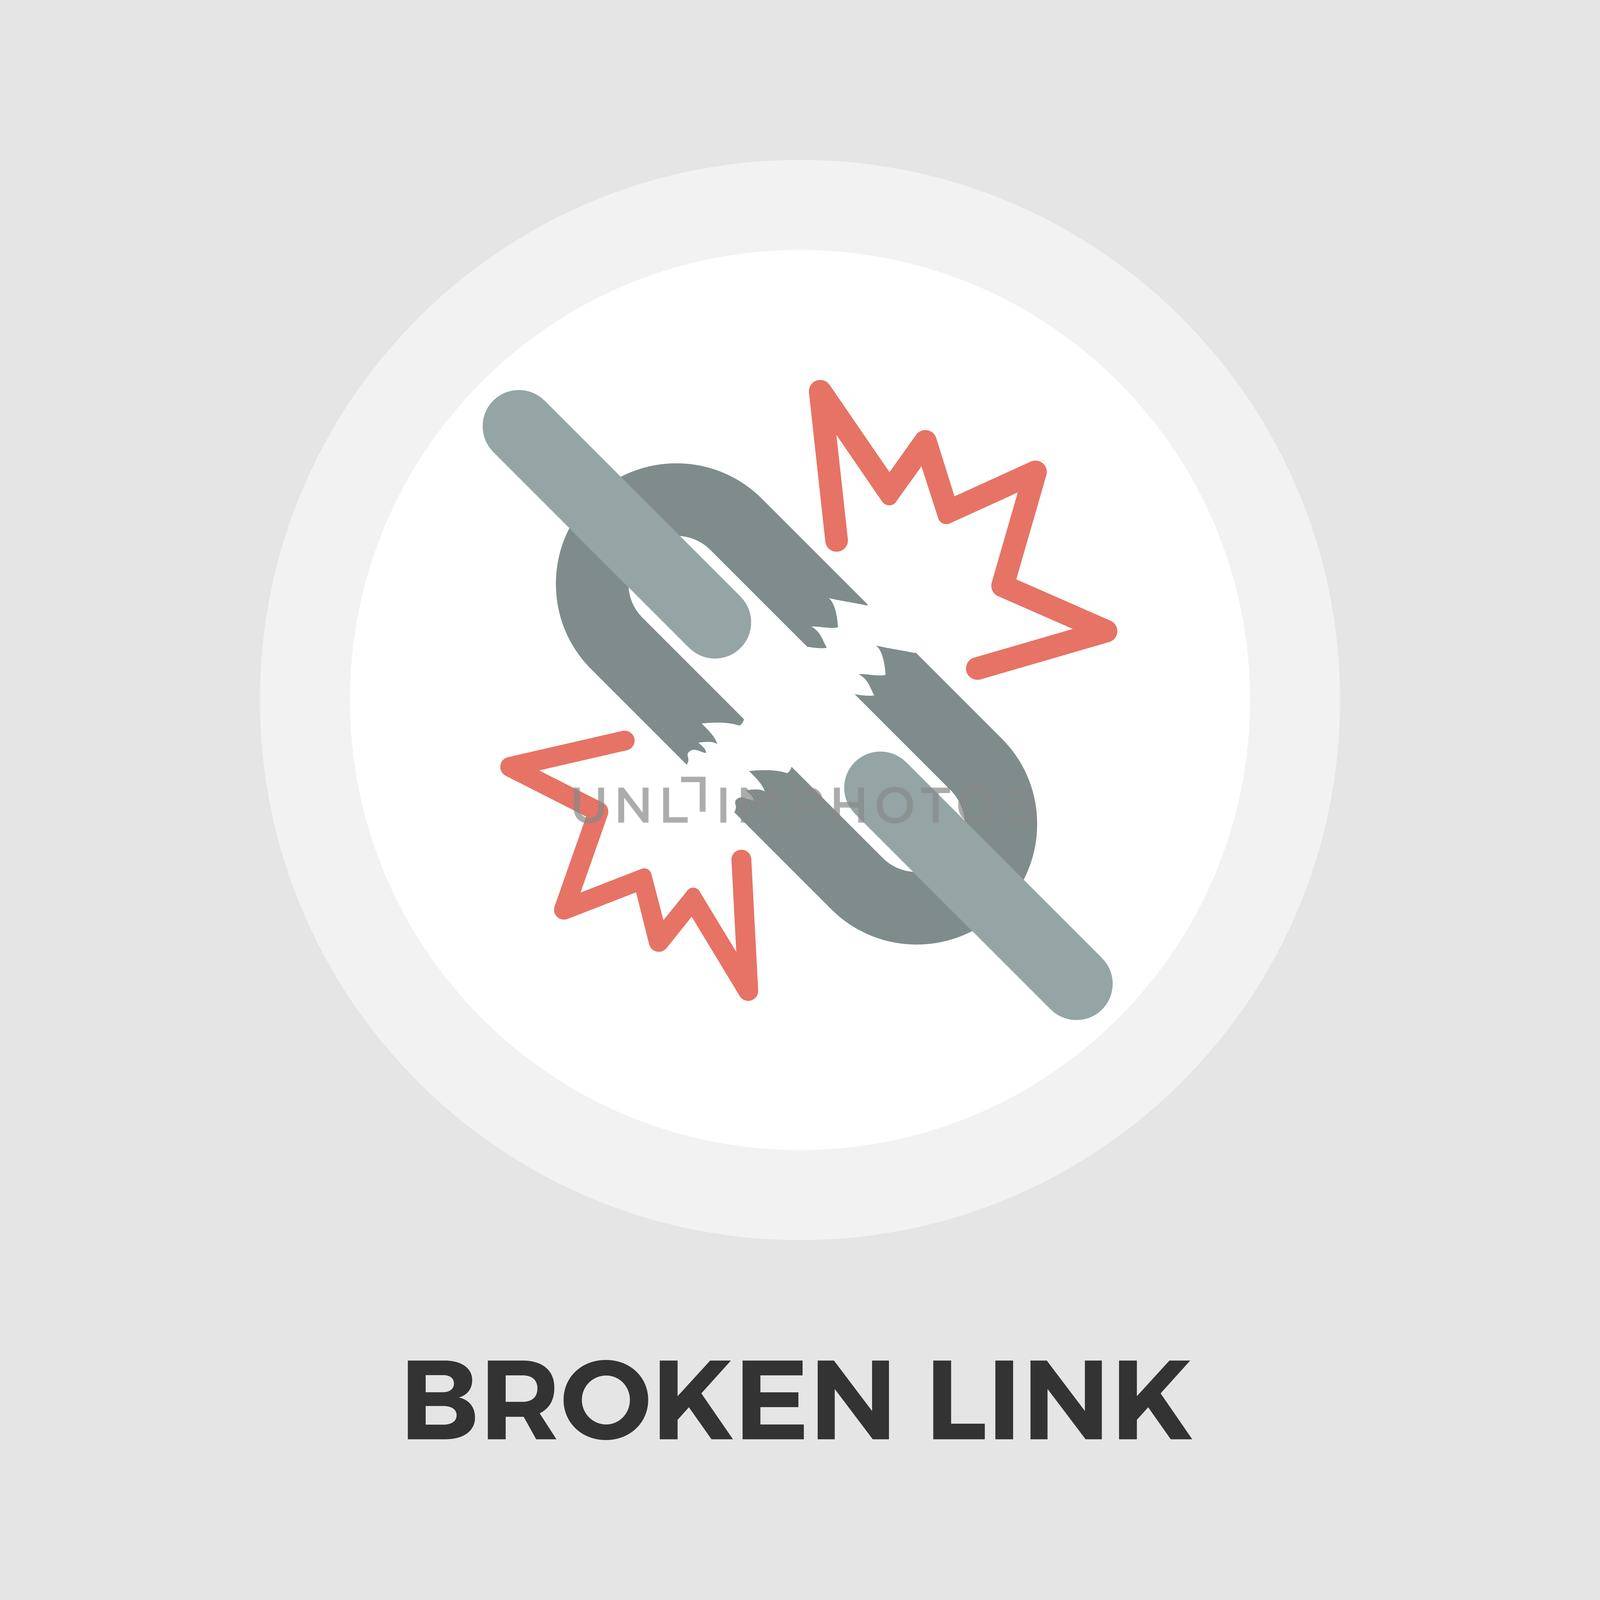 Broken connection flat single icon by smoki